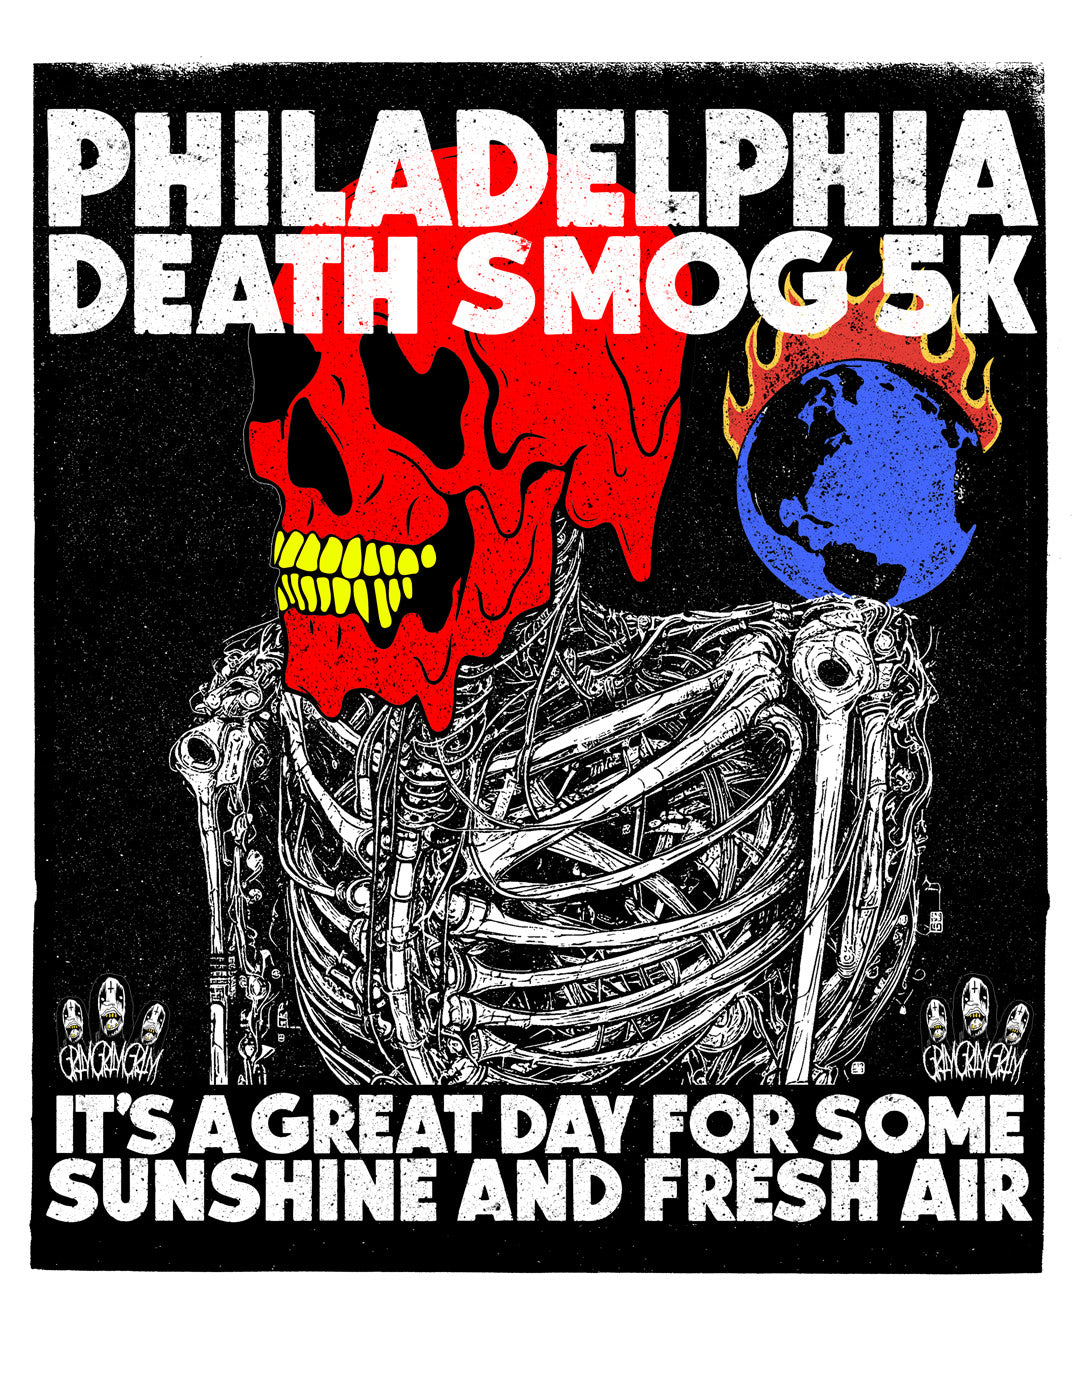 Death Smog 5K